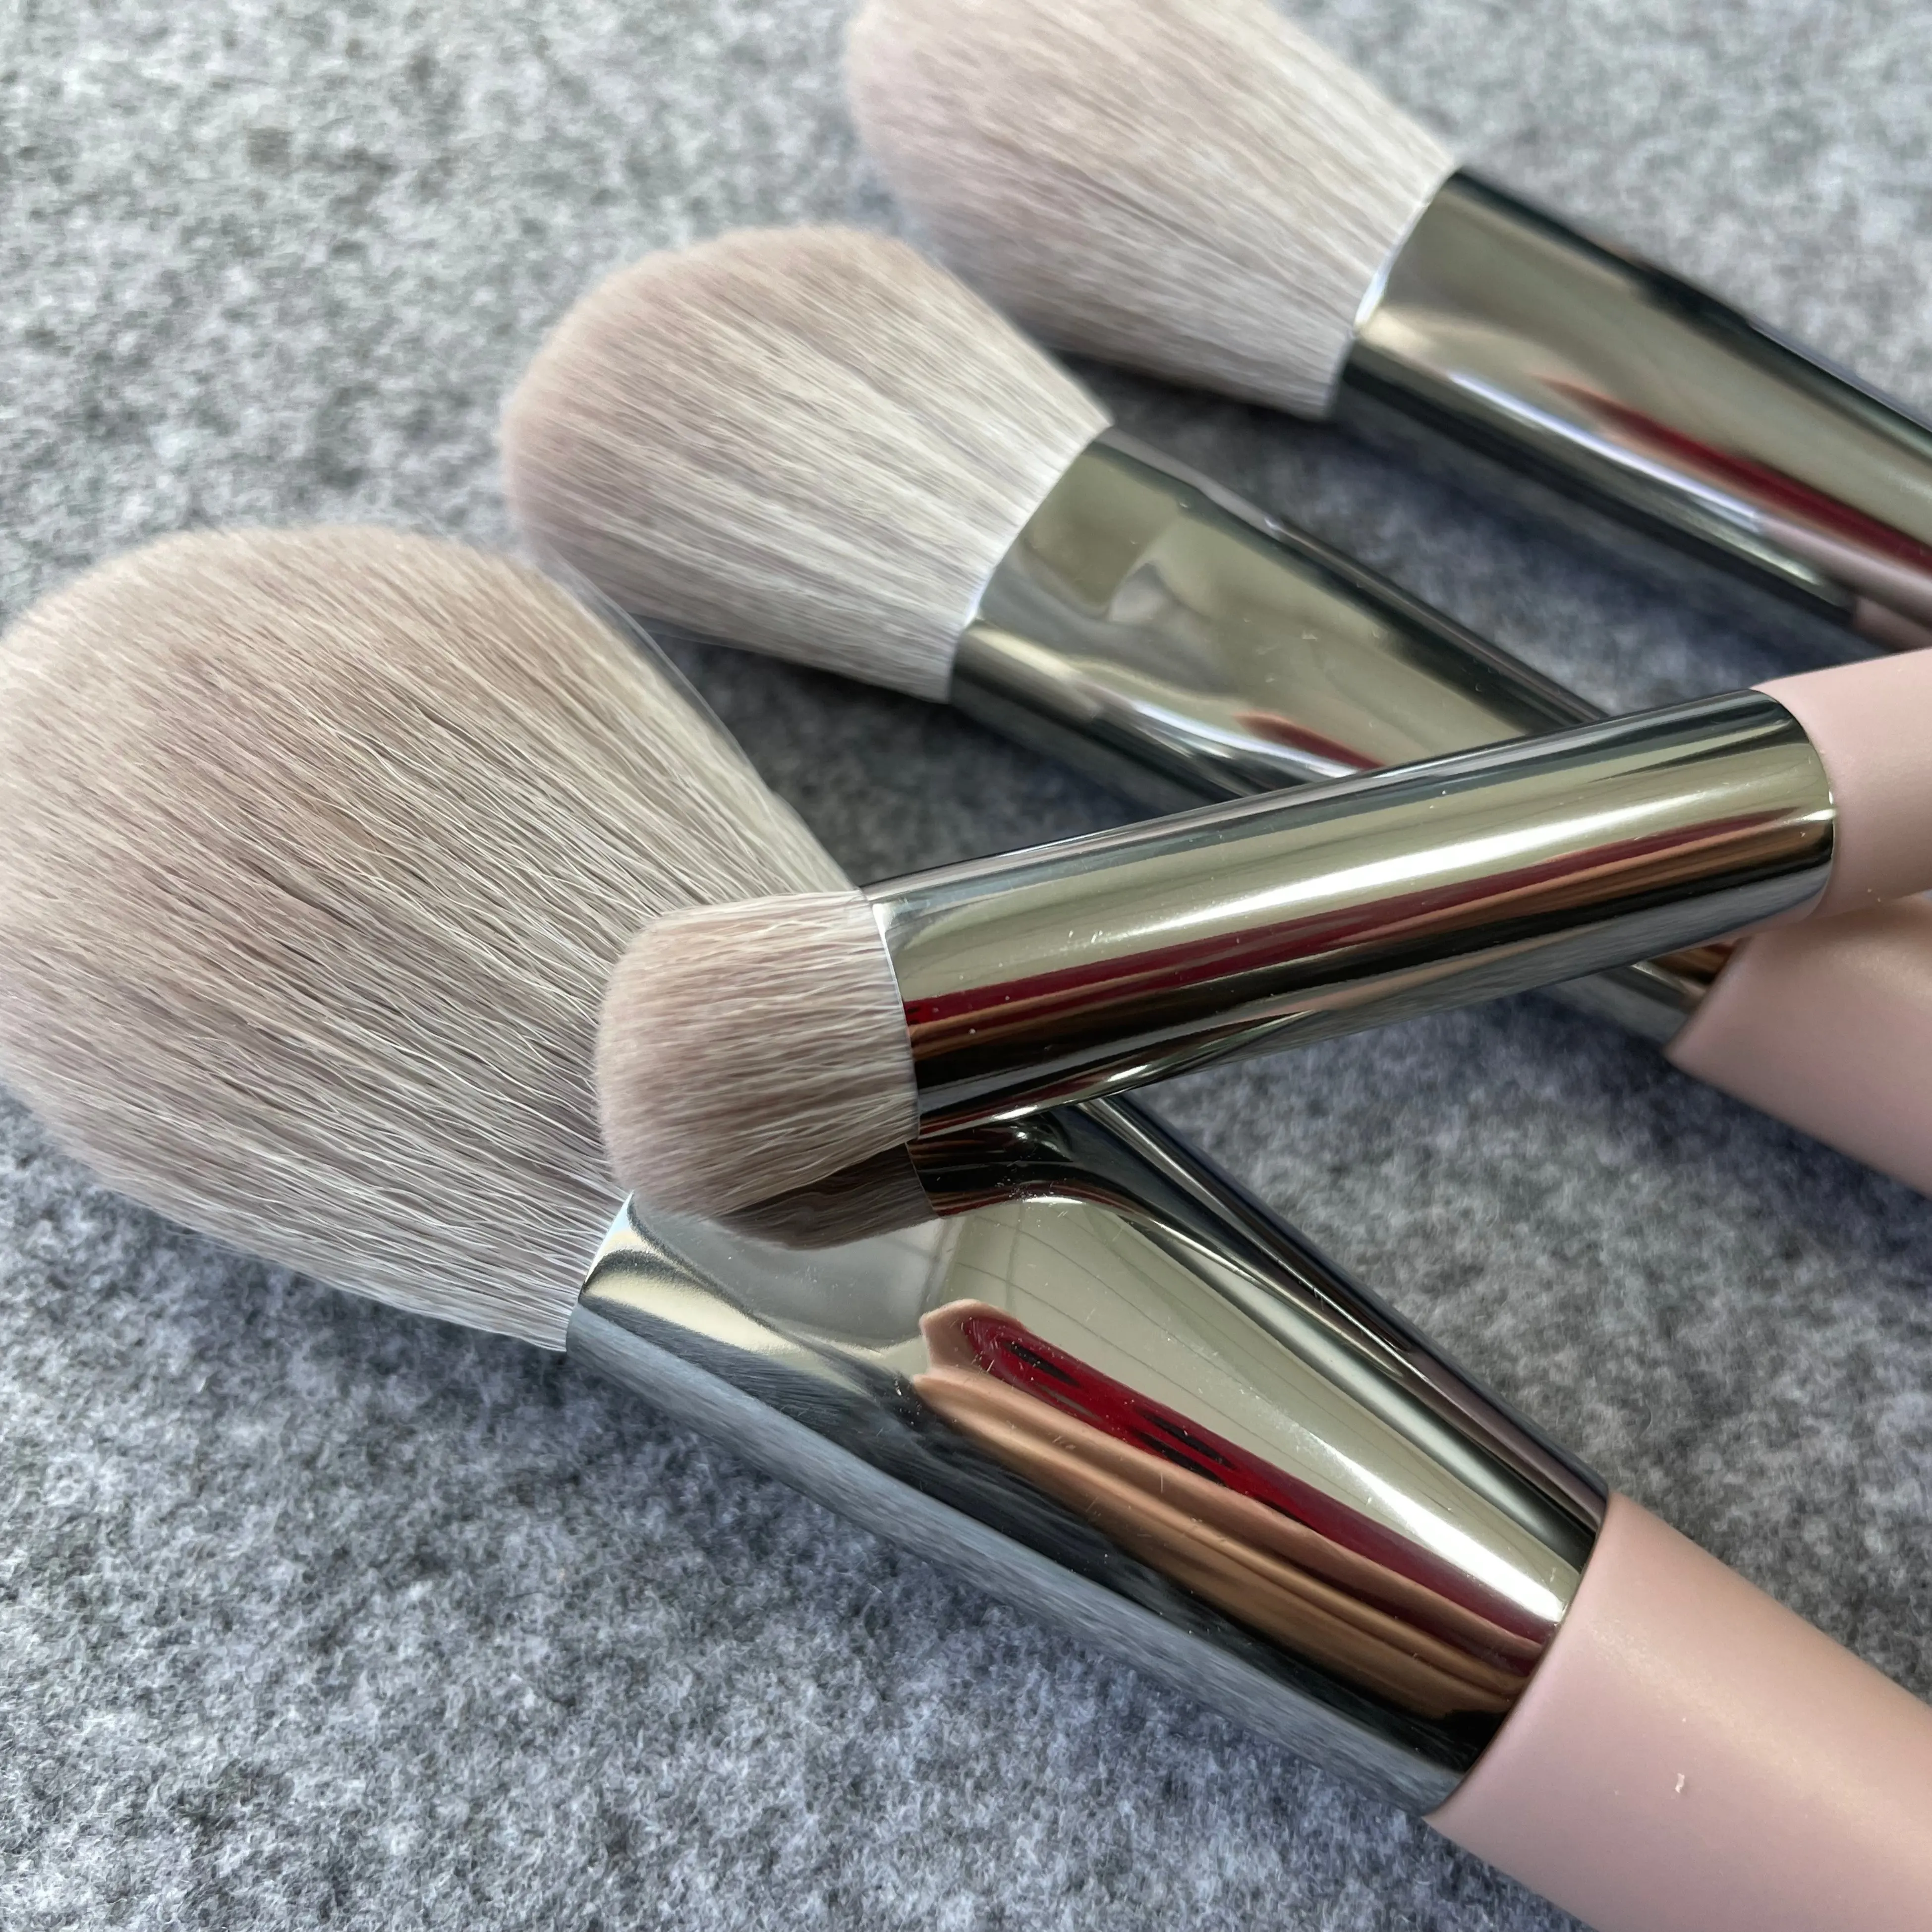 CLING 12 Stk. professionelle Eigenmarke Make-Up Pinsel für lose kompakte Pulver grundlegende Details kompletter Gesichts-Futter-Tool-Kit